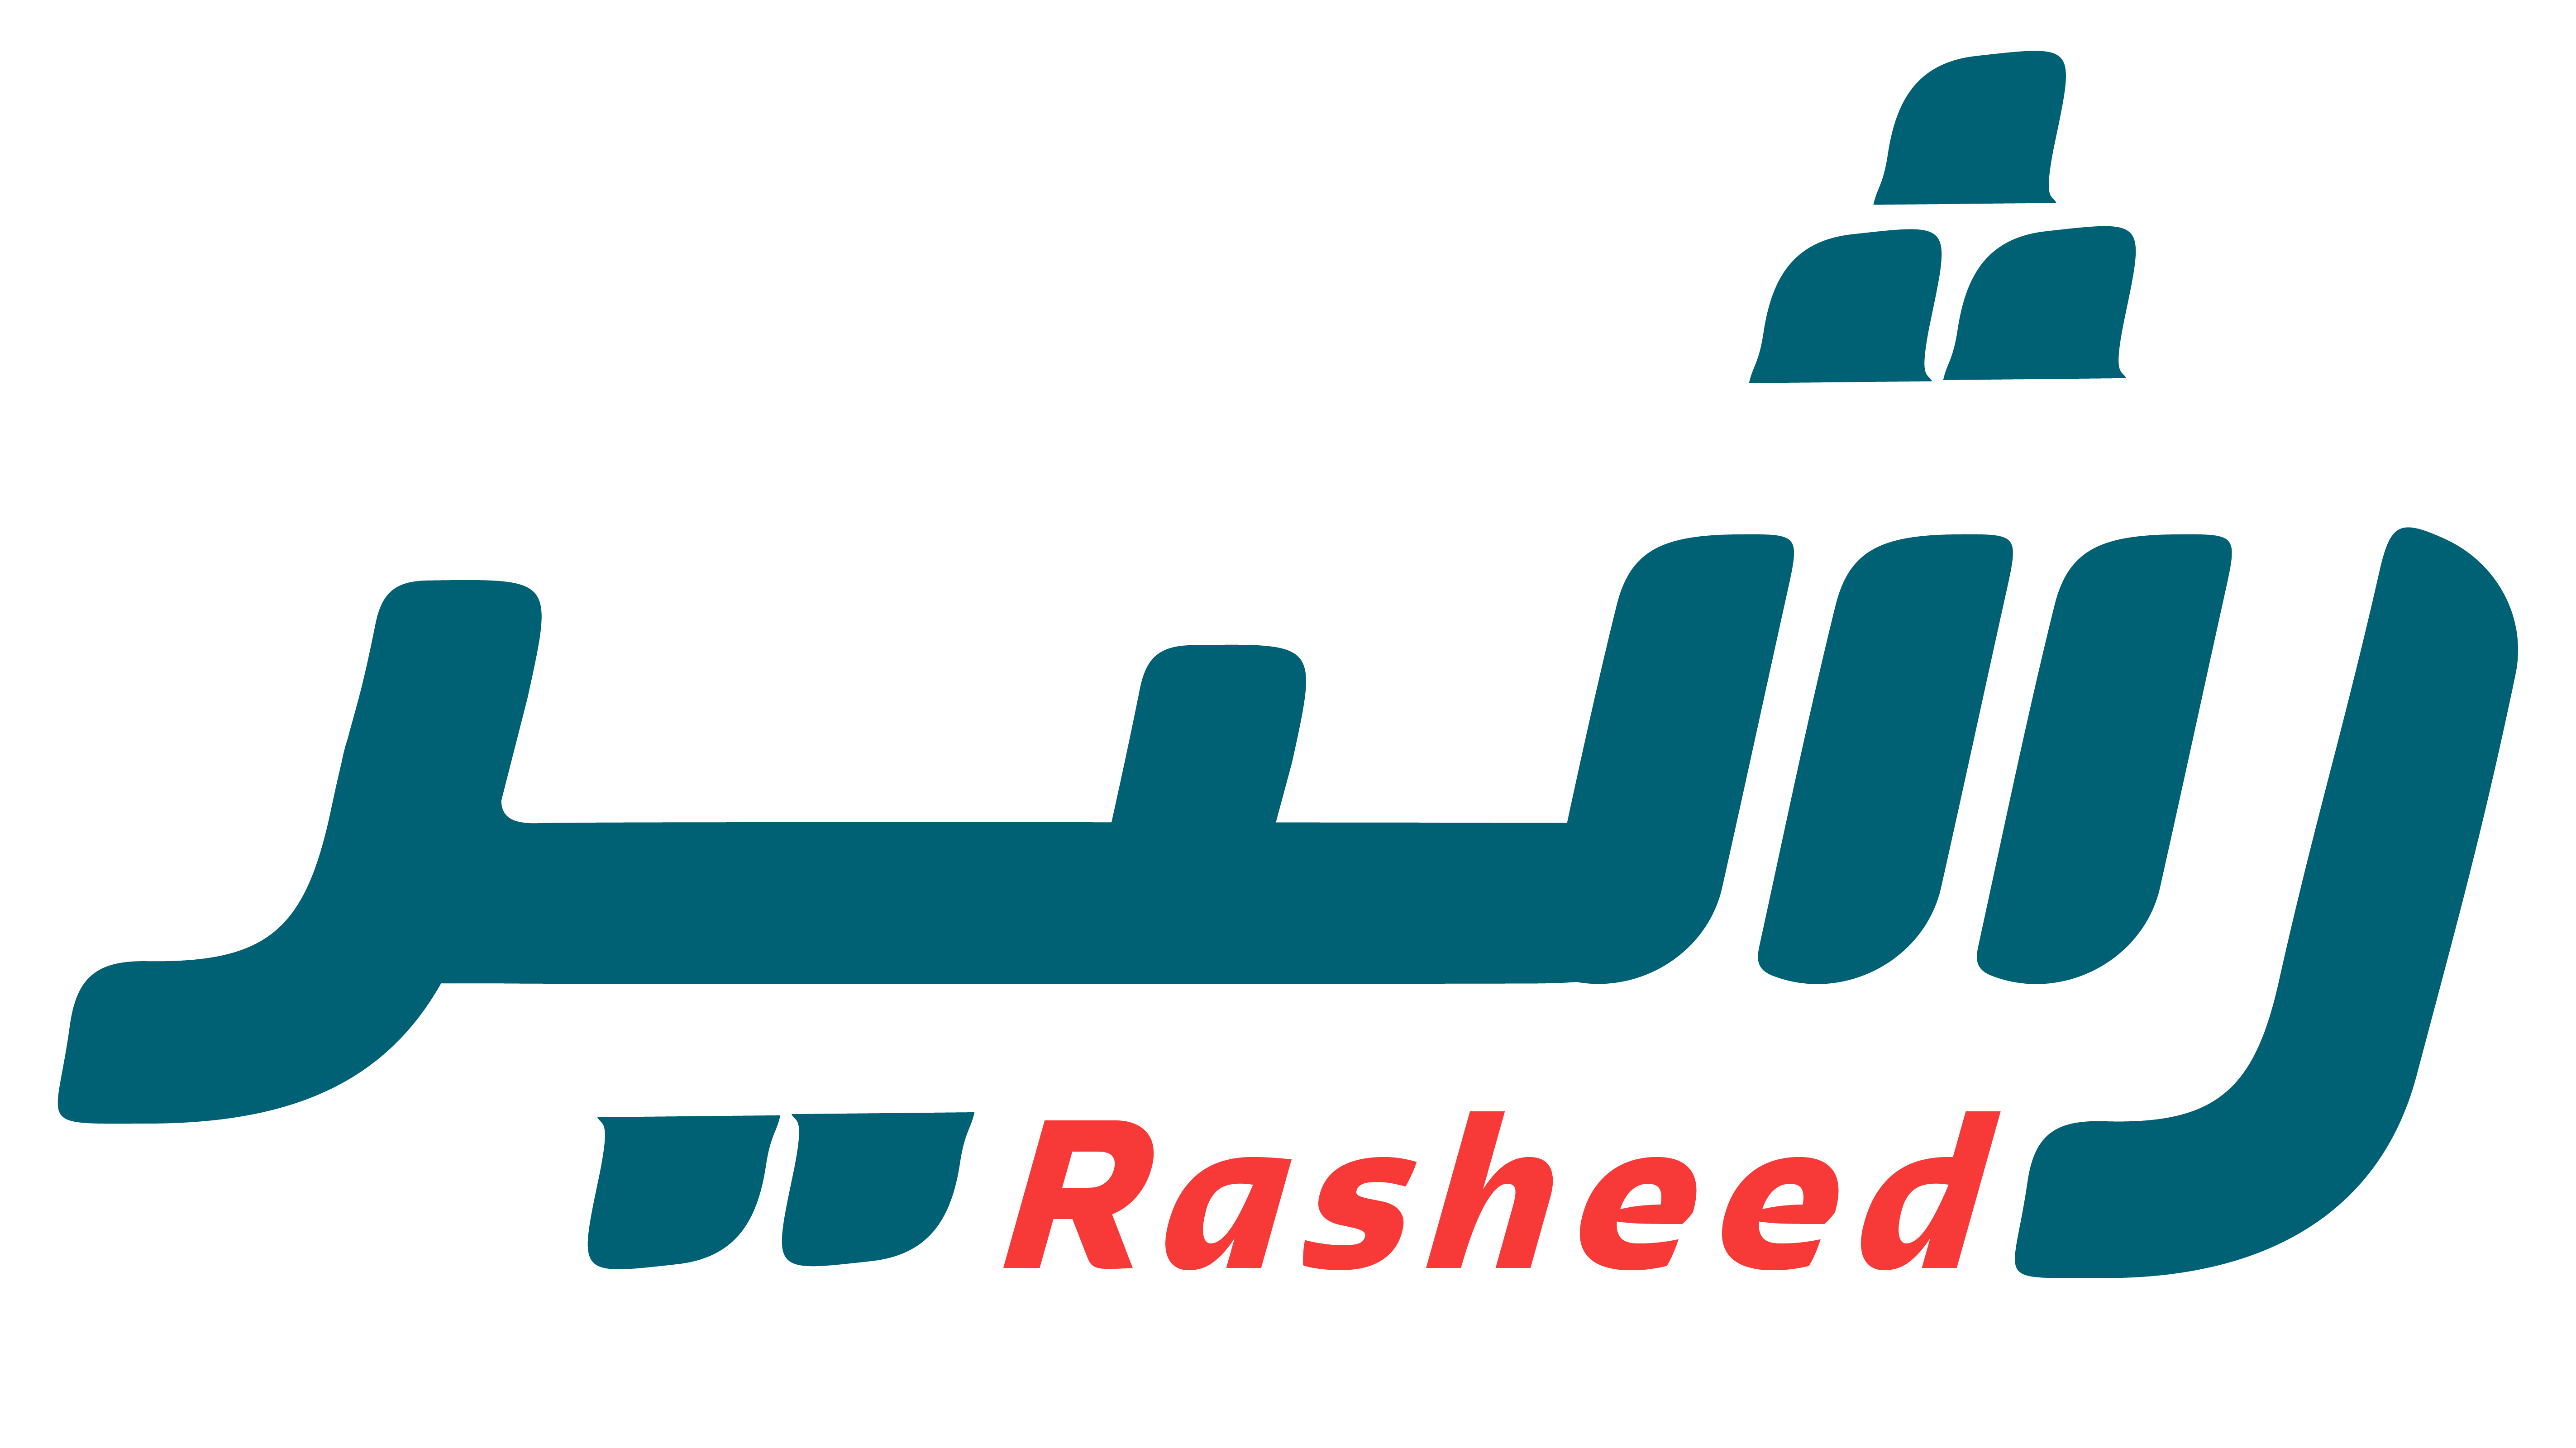 Rasheed-logo-01